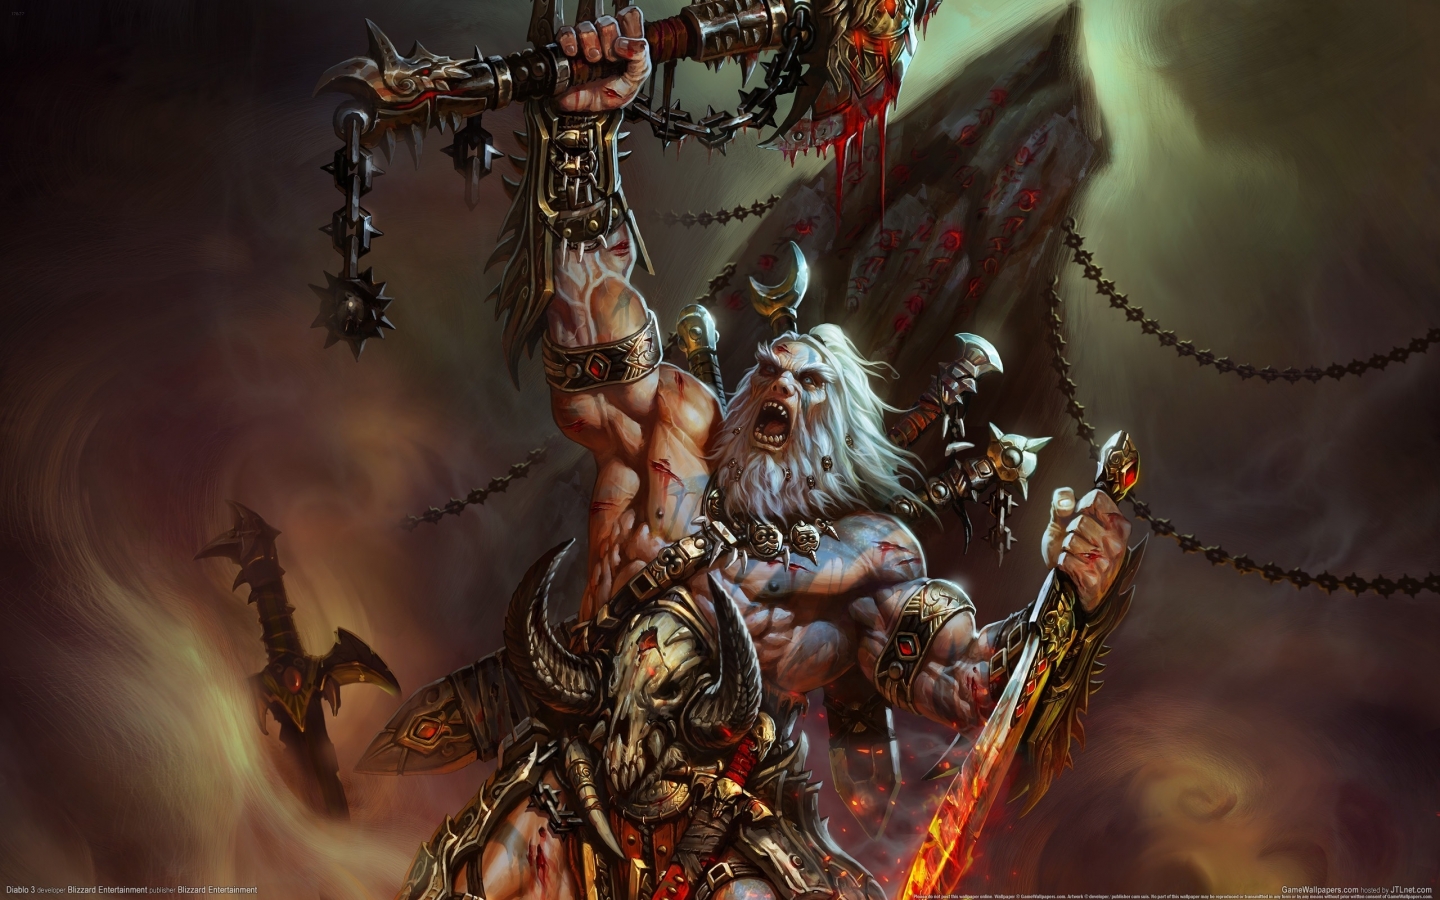 Diablo 3 - The Barbarian for 1440 x 900 widescreen resolution